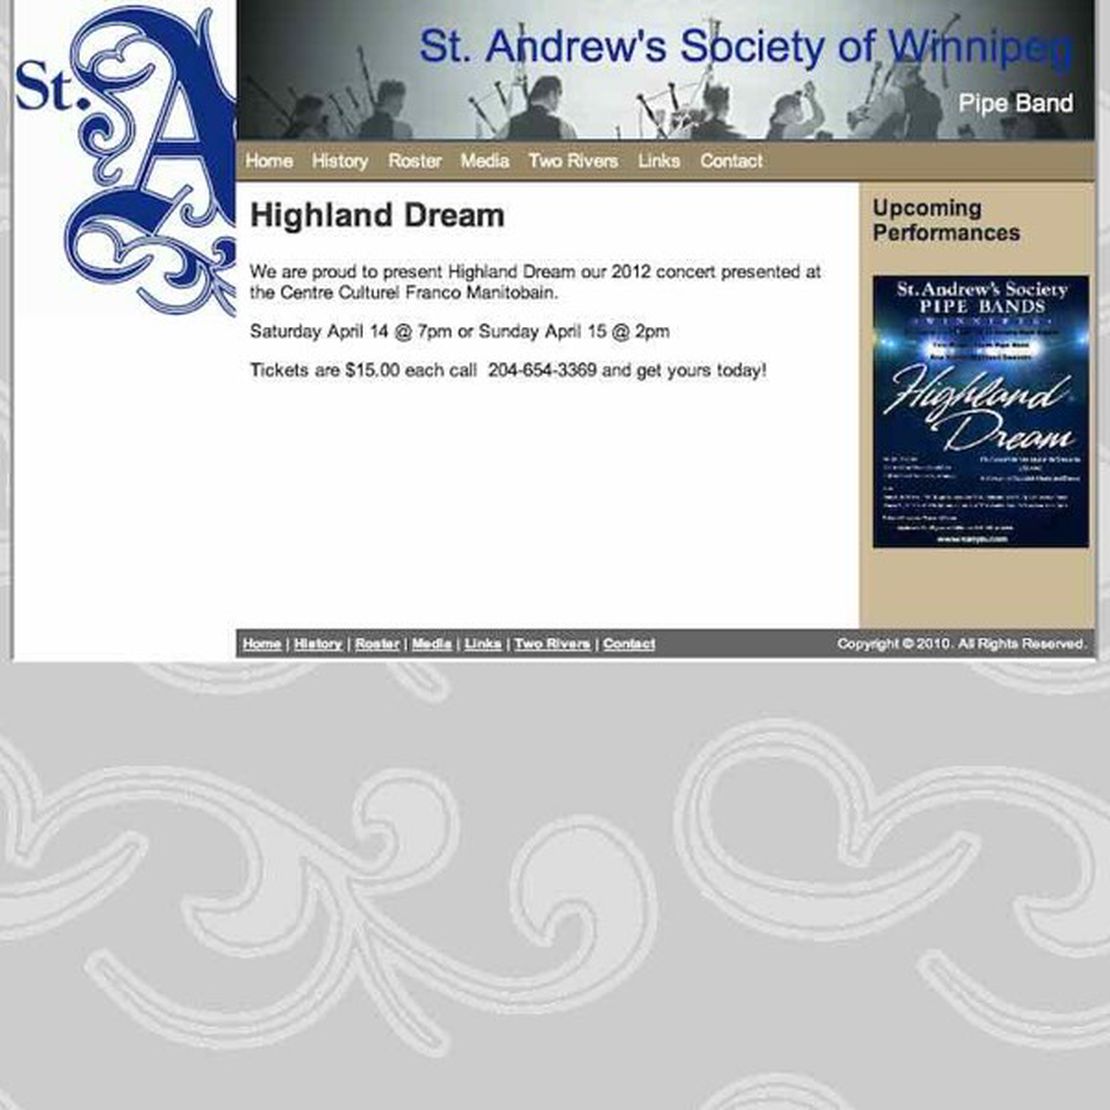 st. andrew's society of winnipeg pipe band